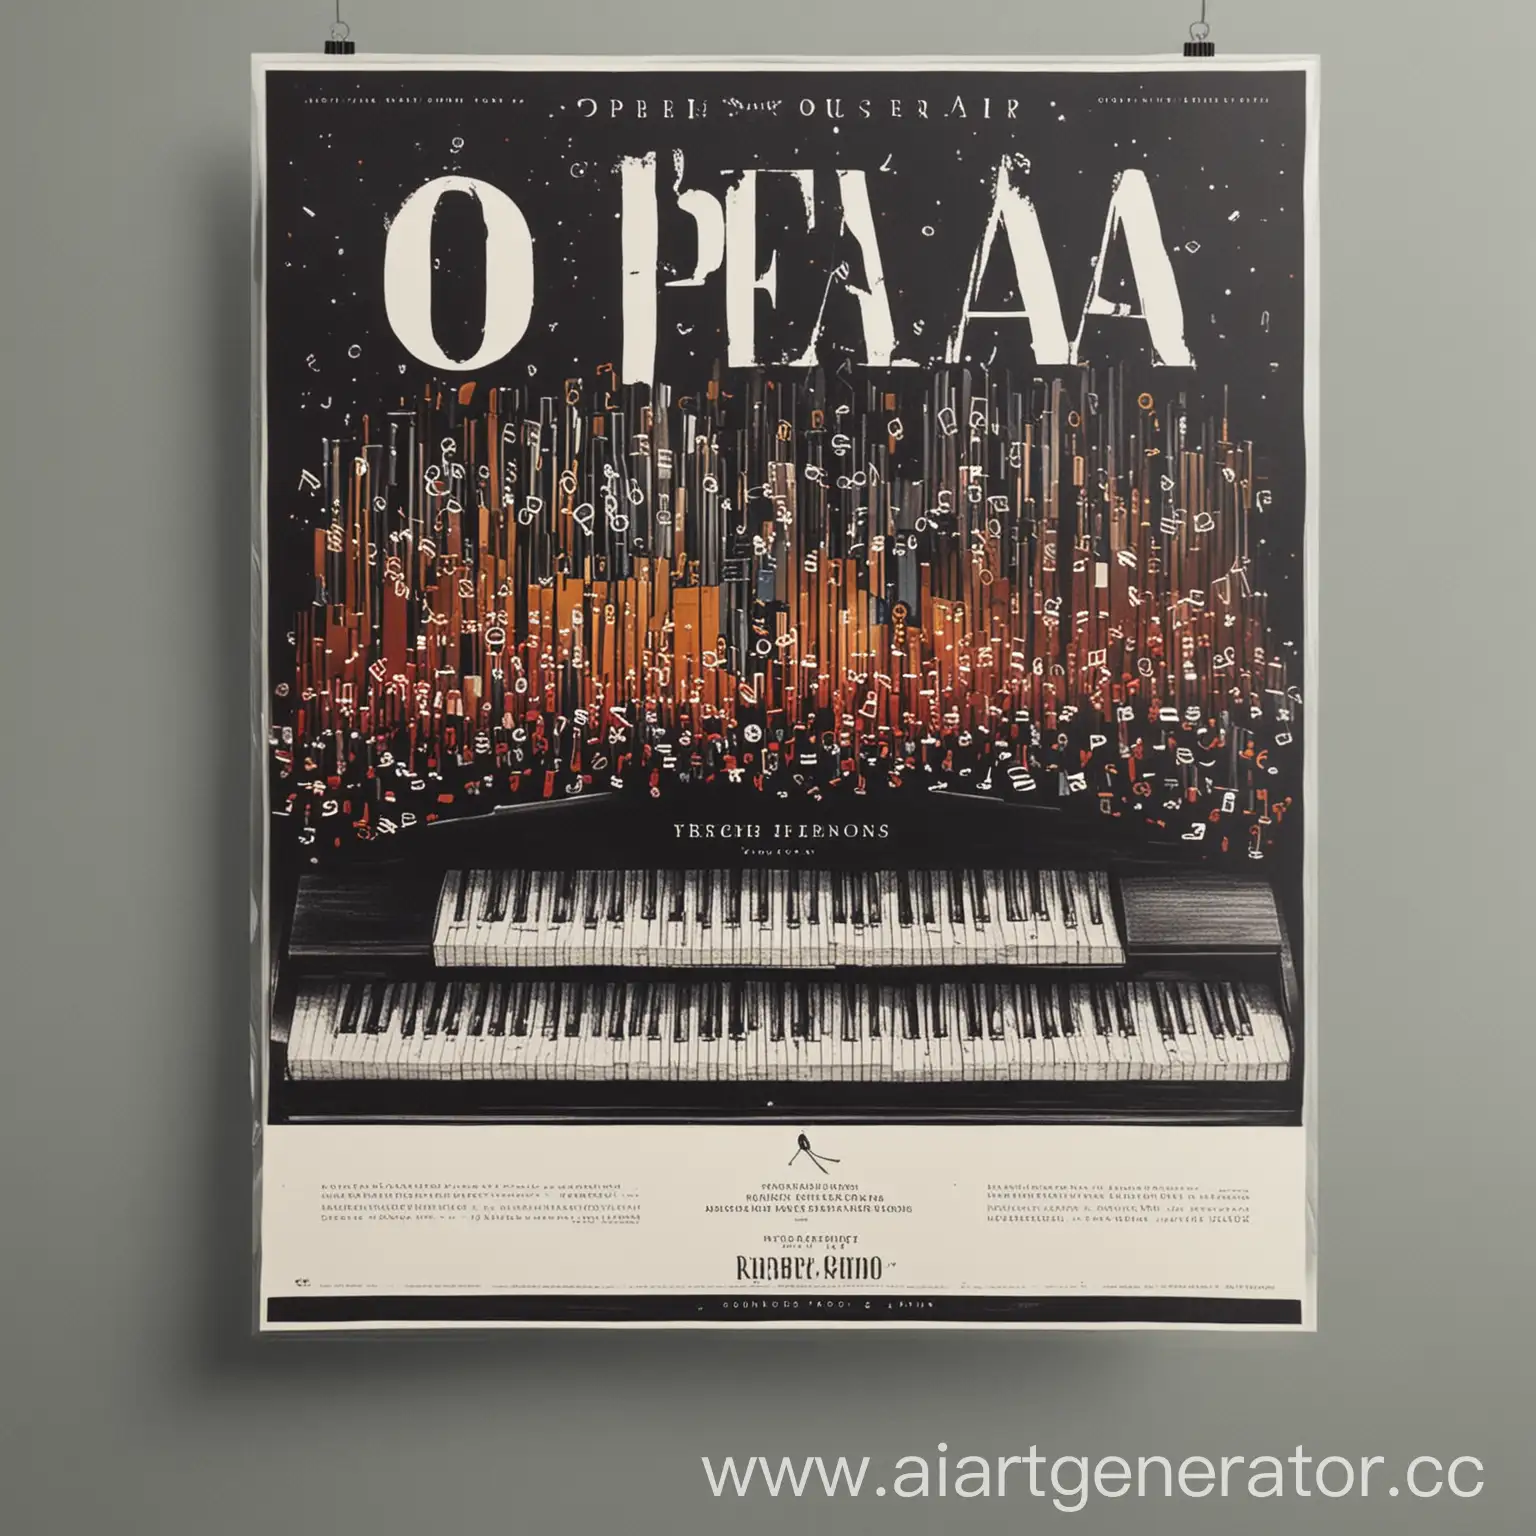 Elegant-Opera-Concert-Poster-with-Piano-Keys